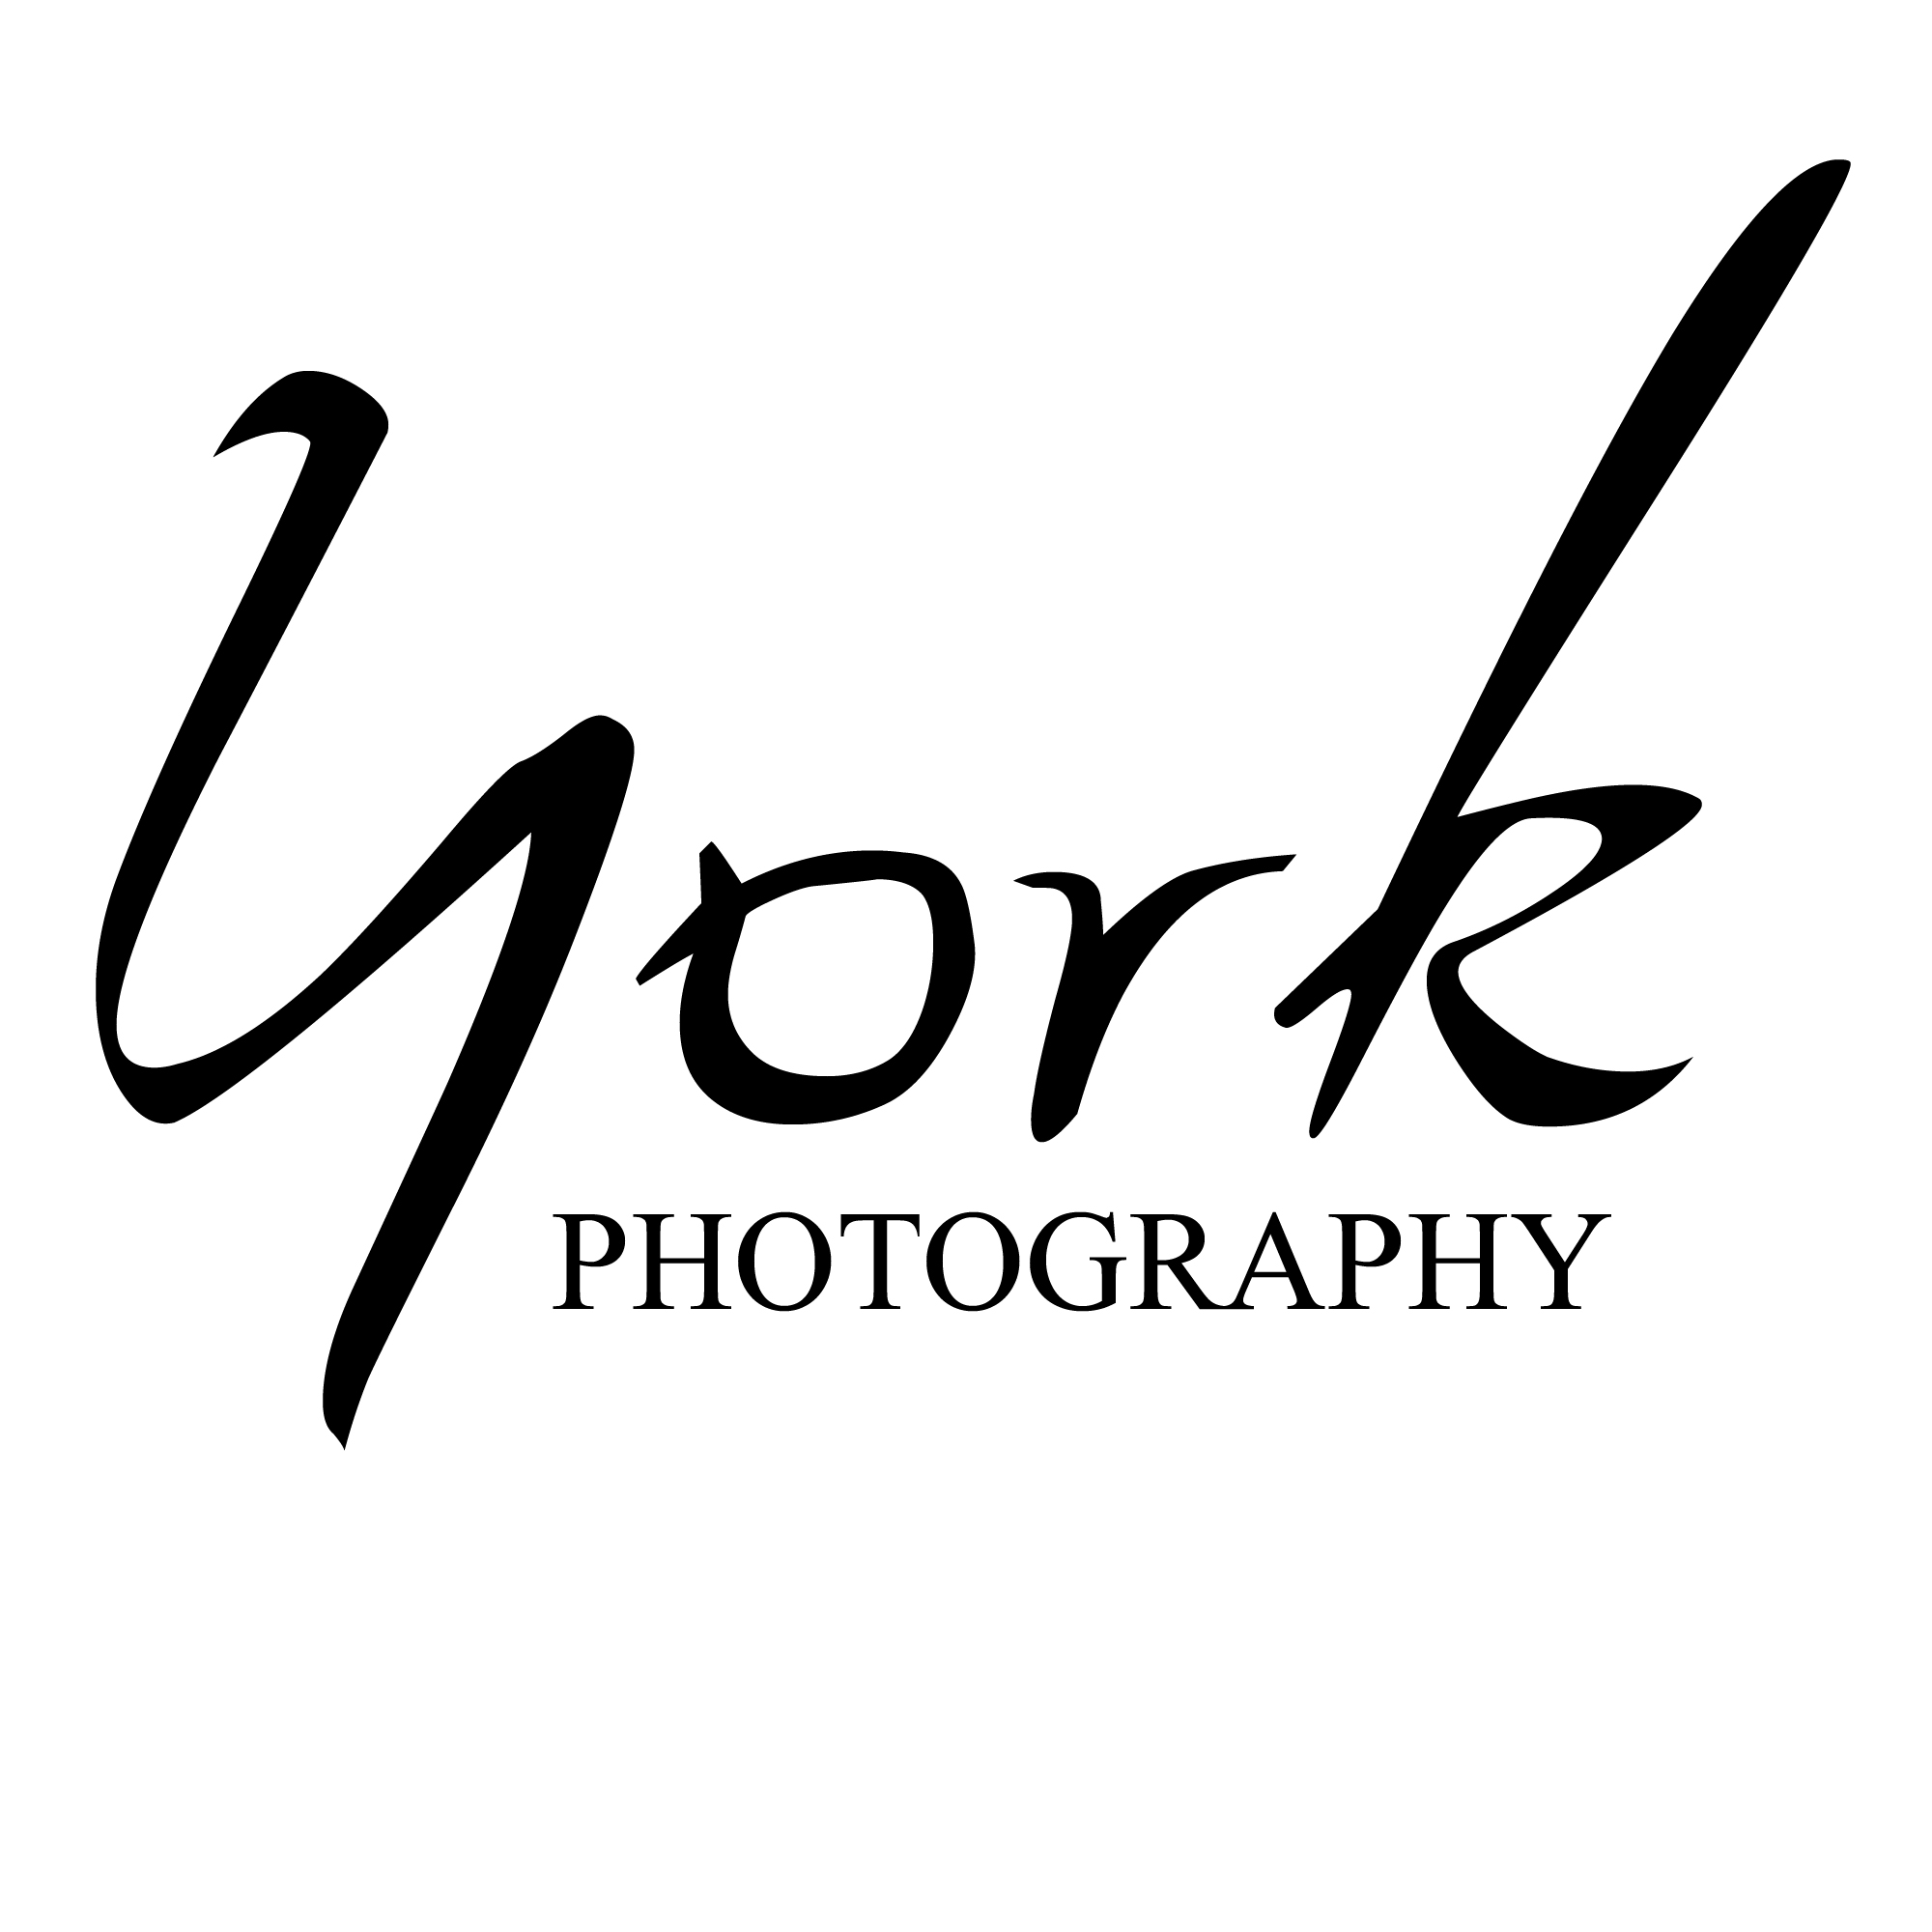 York Photography